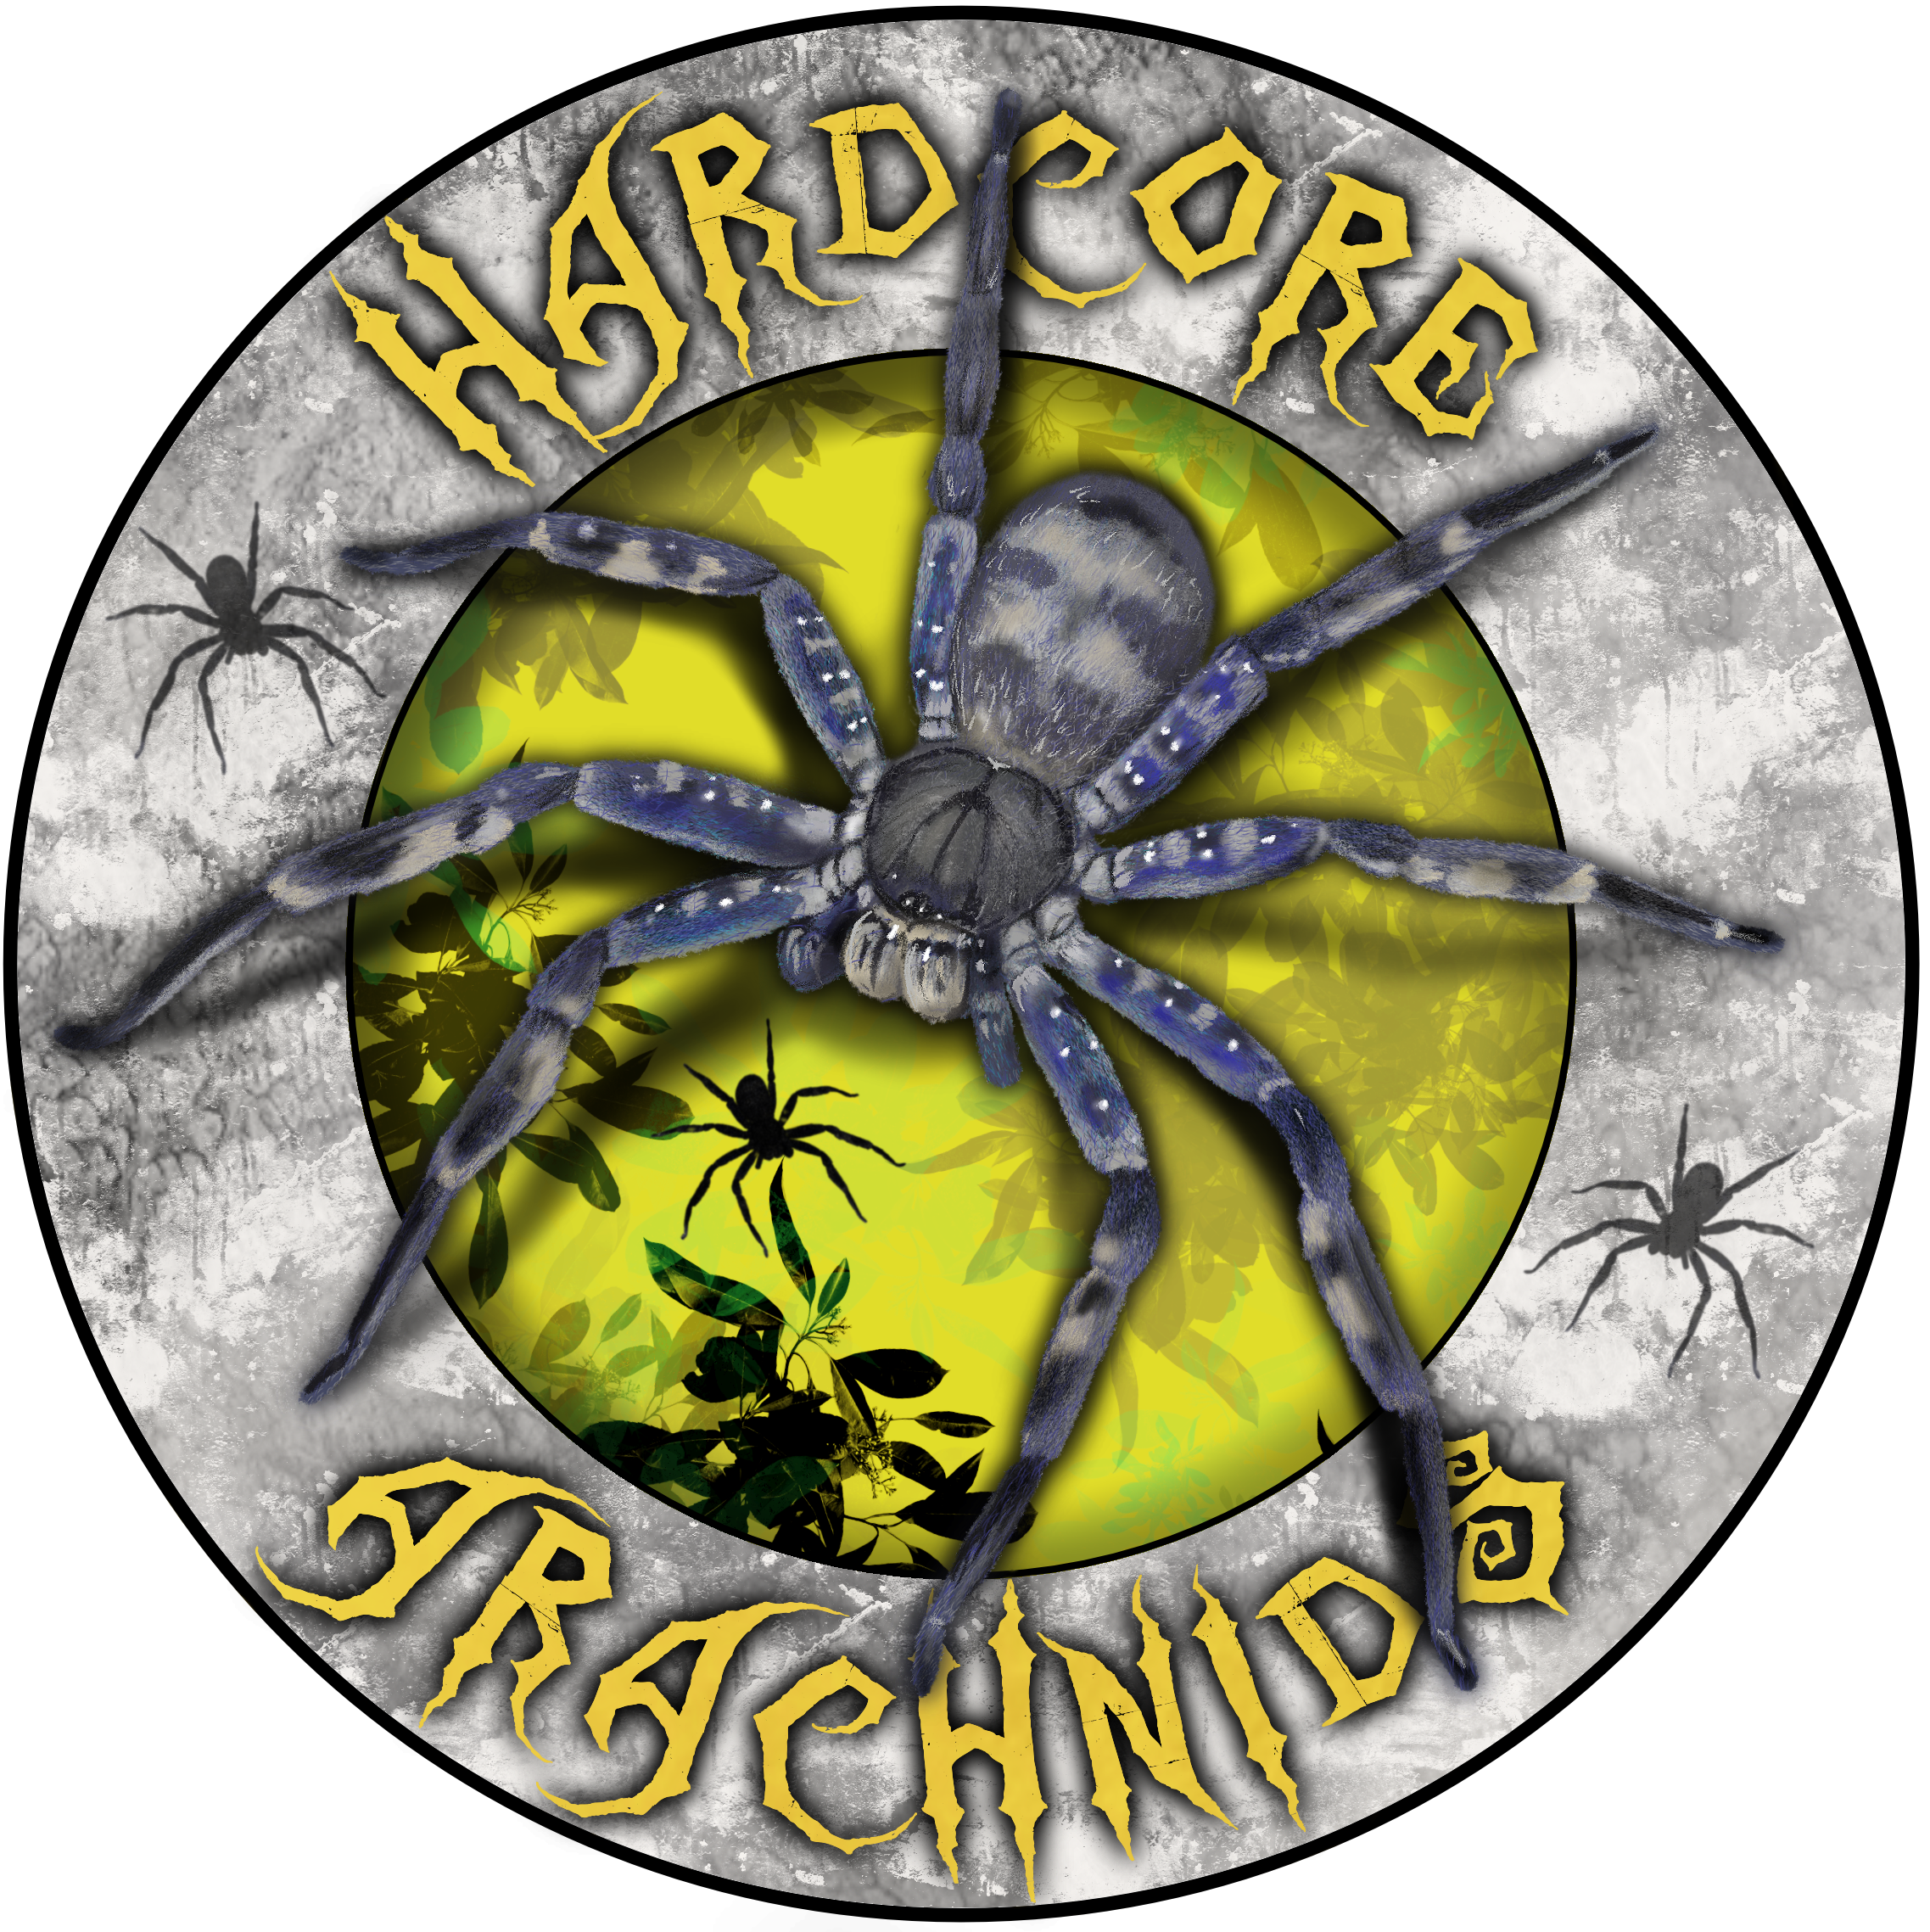 Hardcore Arachnids